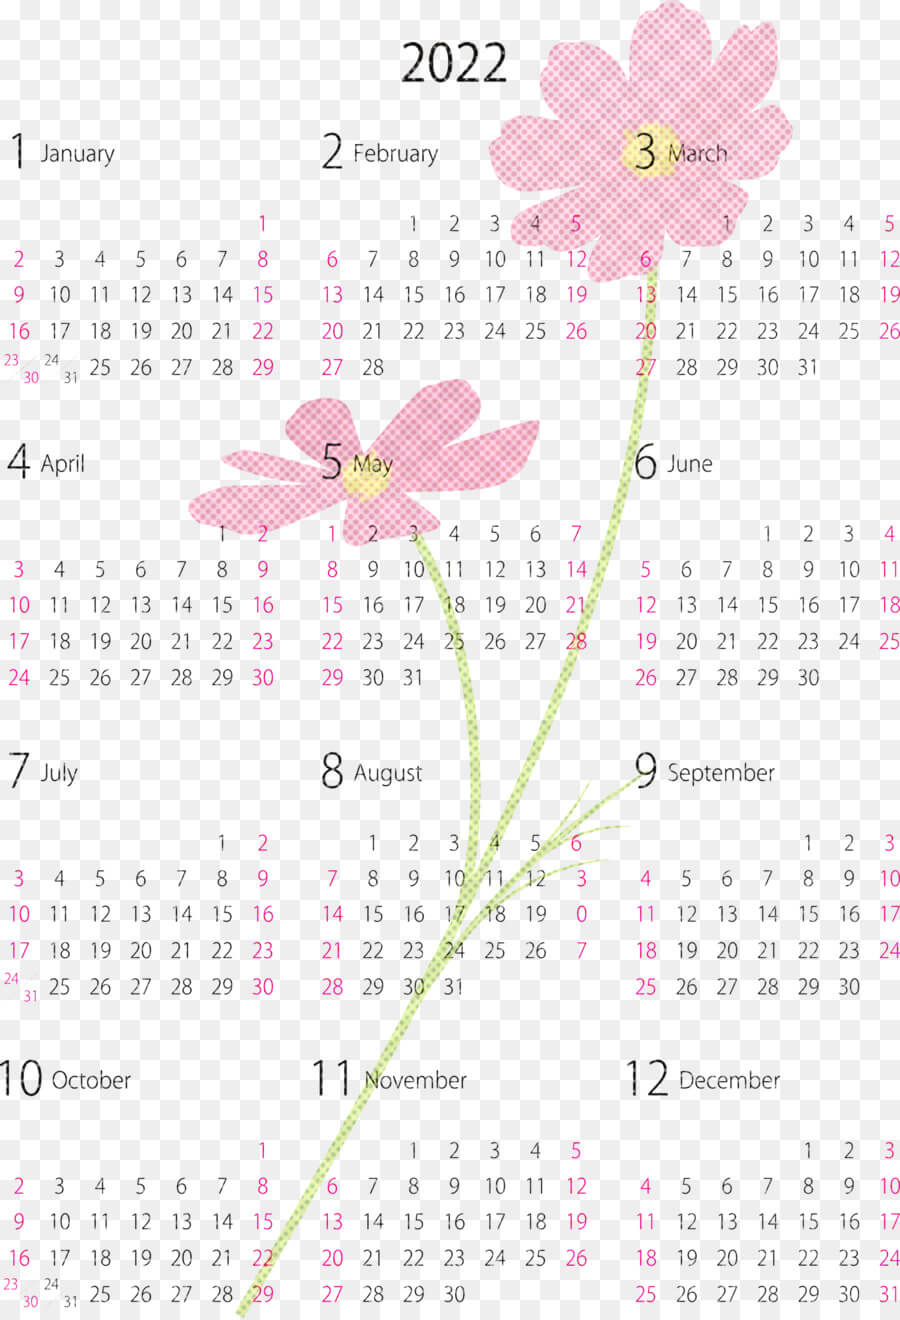 2022 year calendar floral design